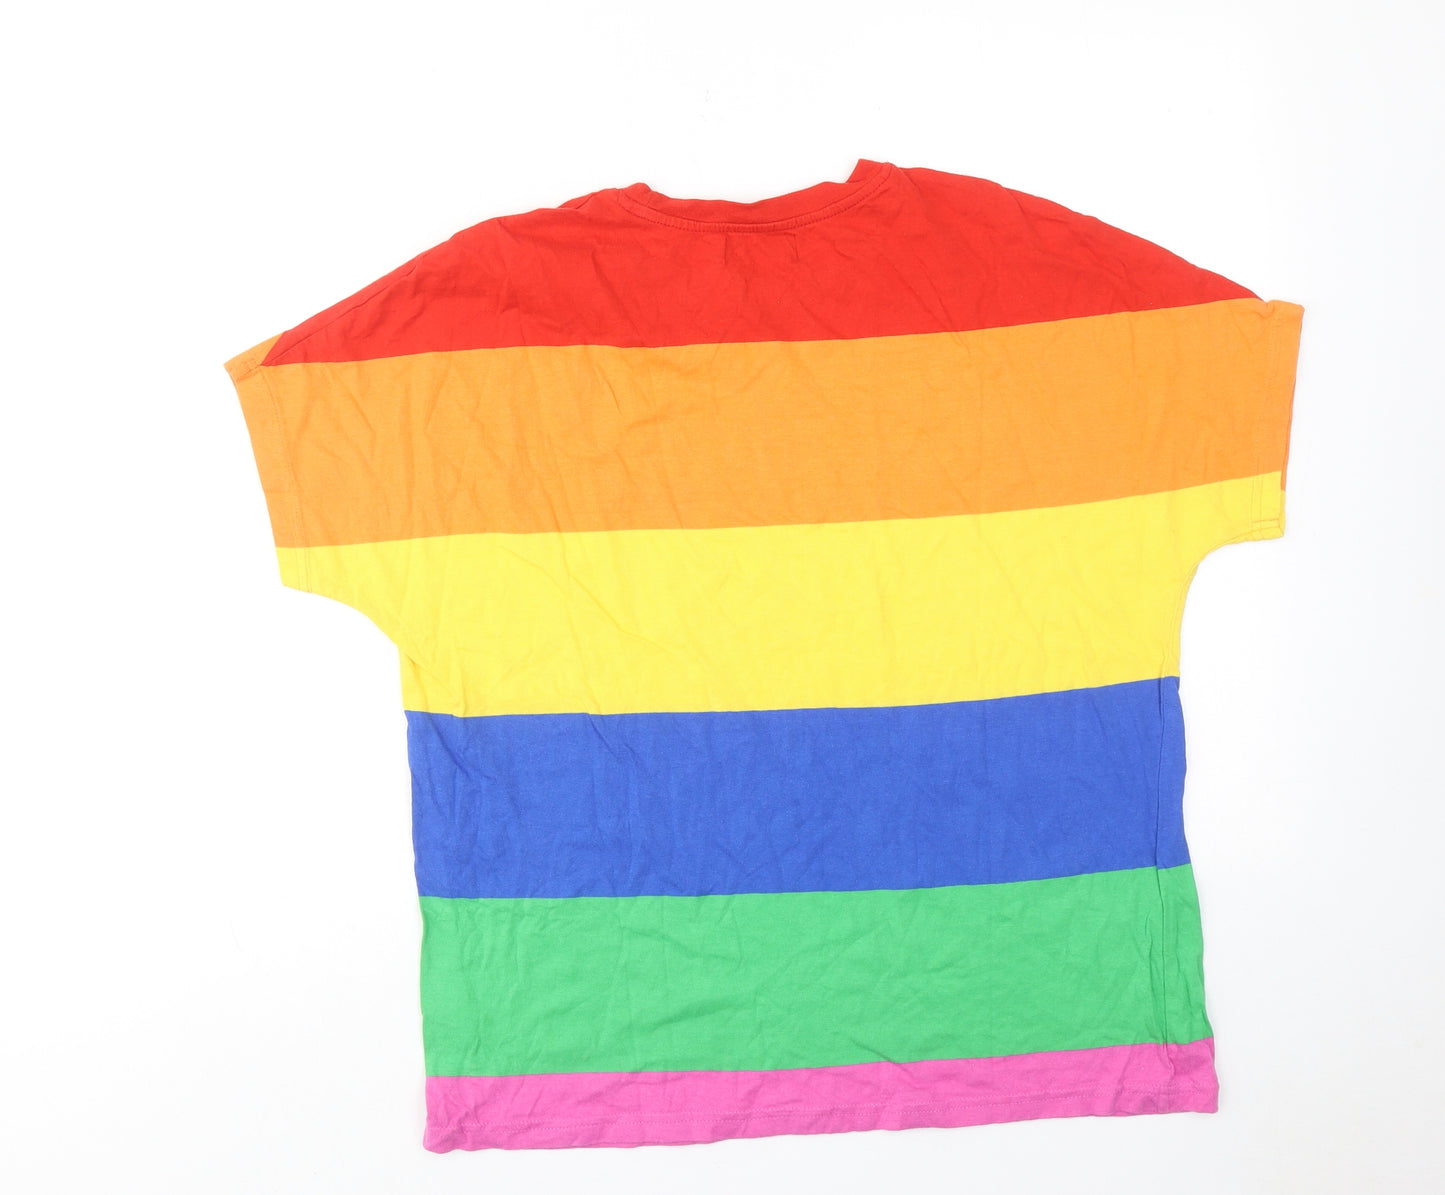 Bershka Womens Multicoloured Striped Cotton Basic T-Shirt Size XS Round Neck